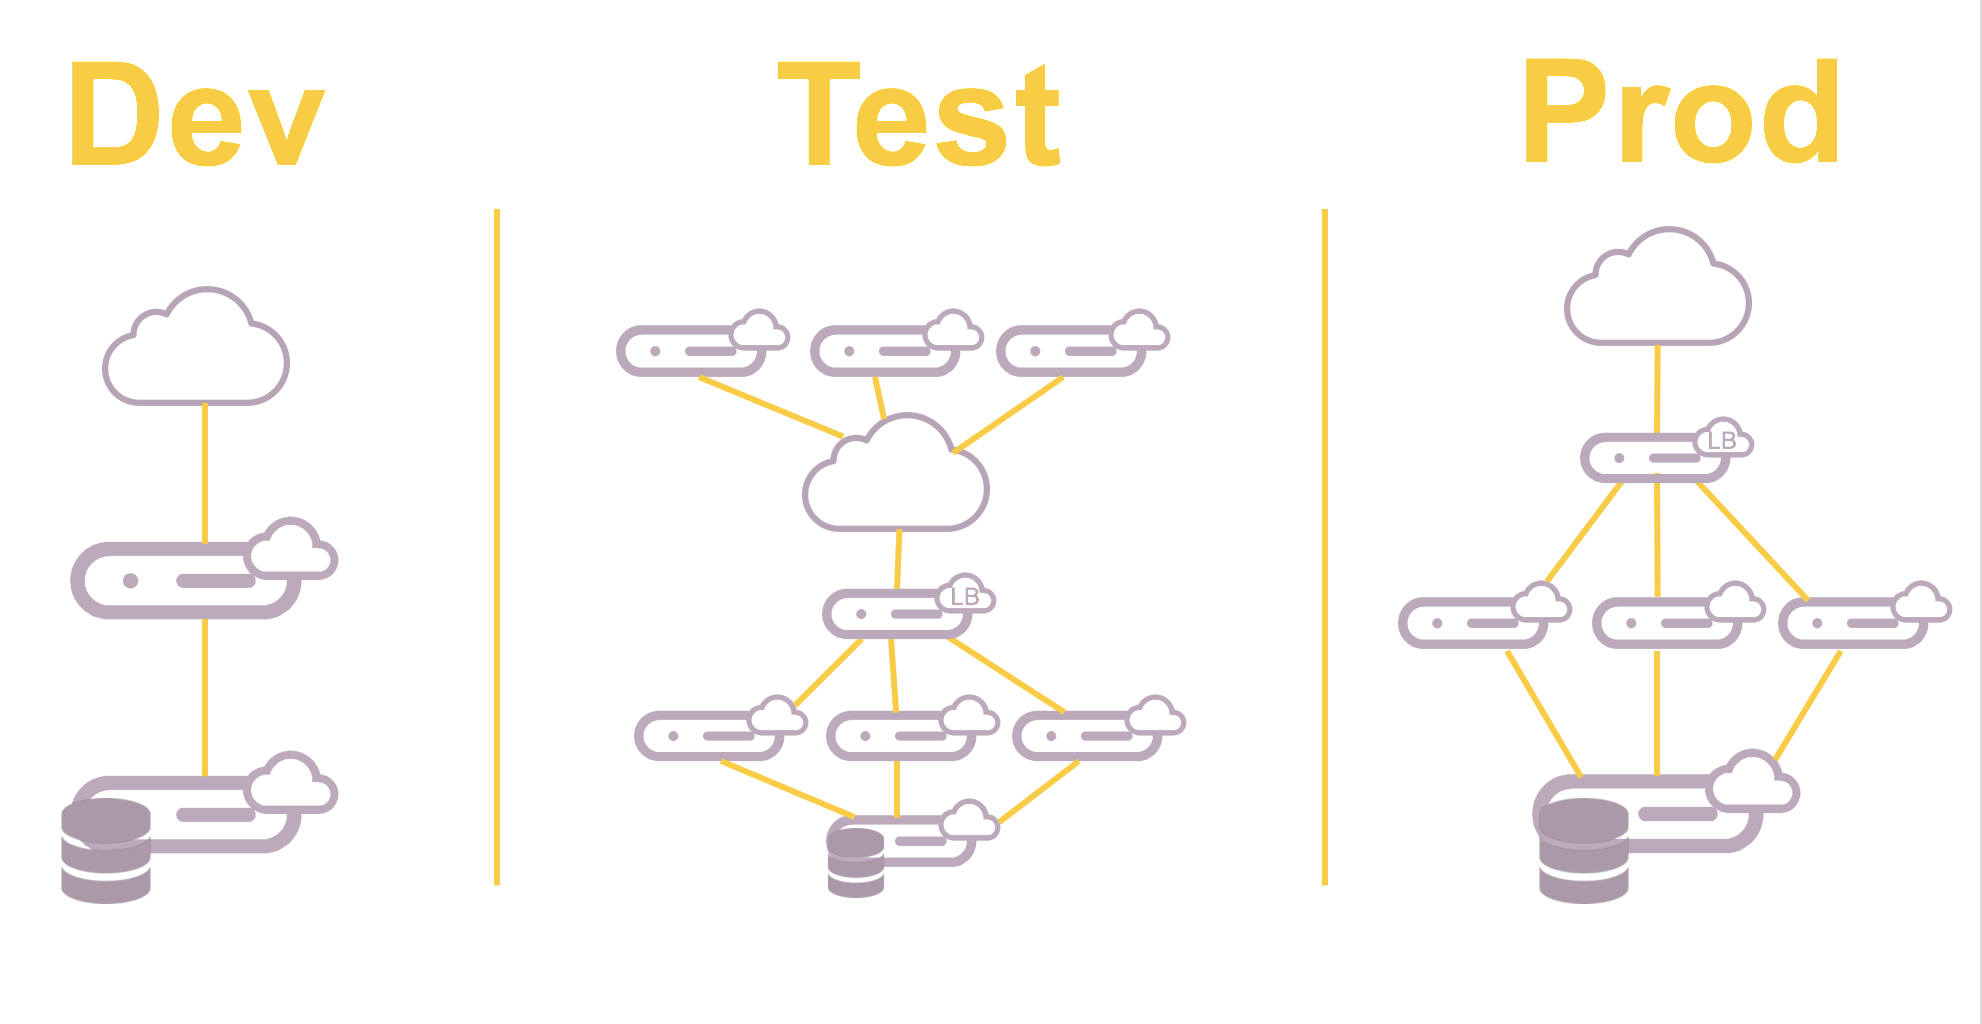 Test architecture